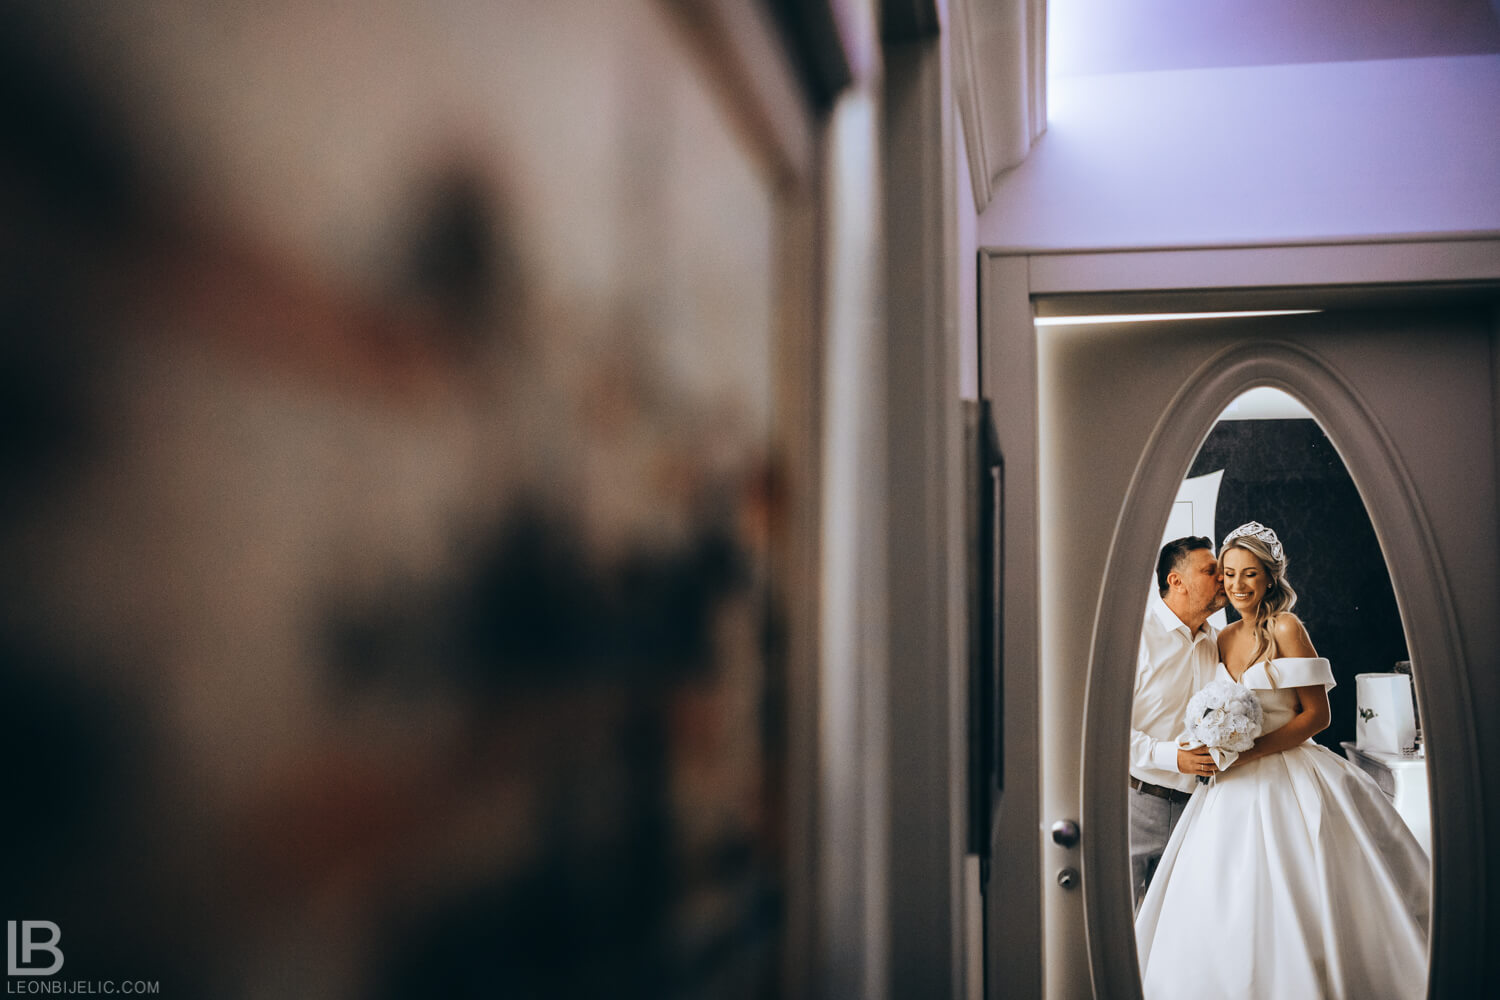 WEDDING BELGRADE - TIJANA I MARKO - LEON BIJELIC PHOTOGRAPHY PHOTOGRAPHER - SERBIA - SRBIJA - BEOGRAD